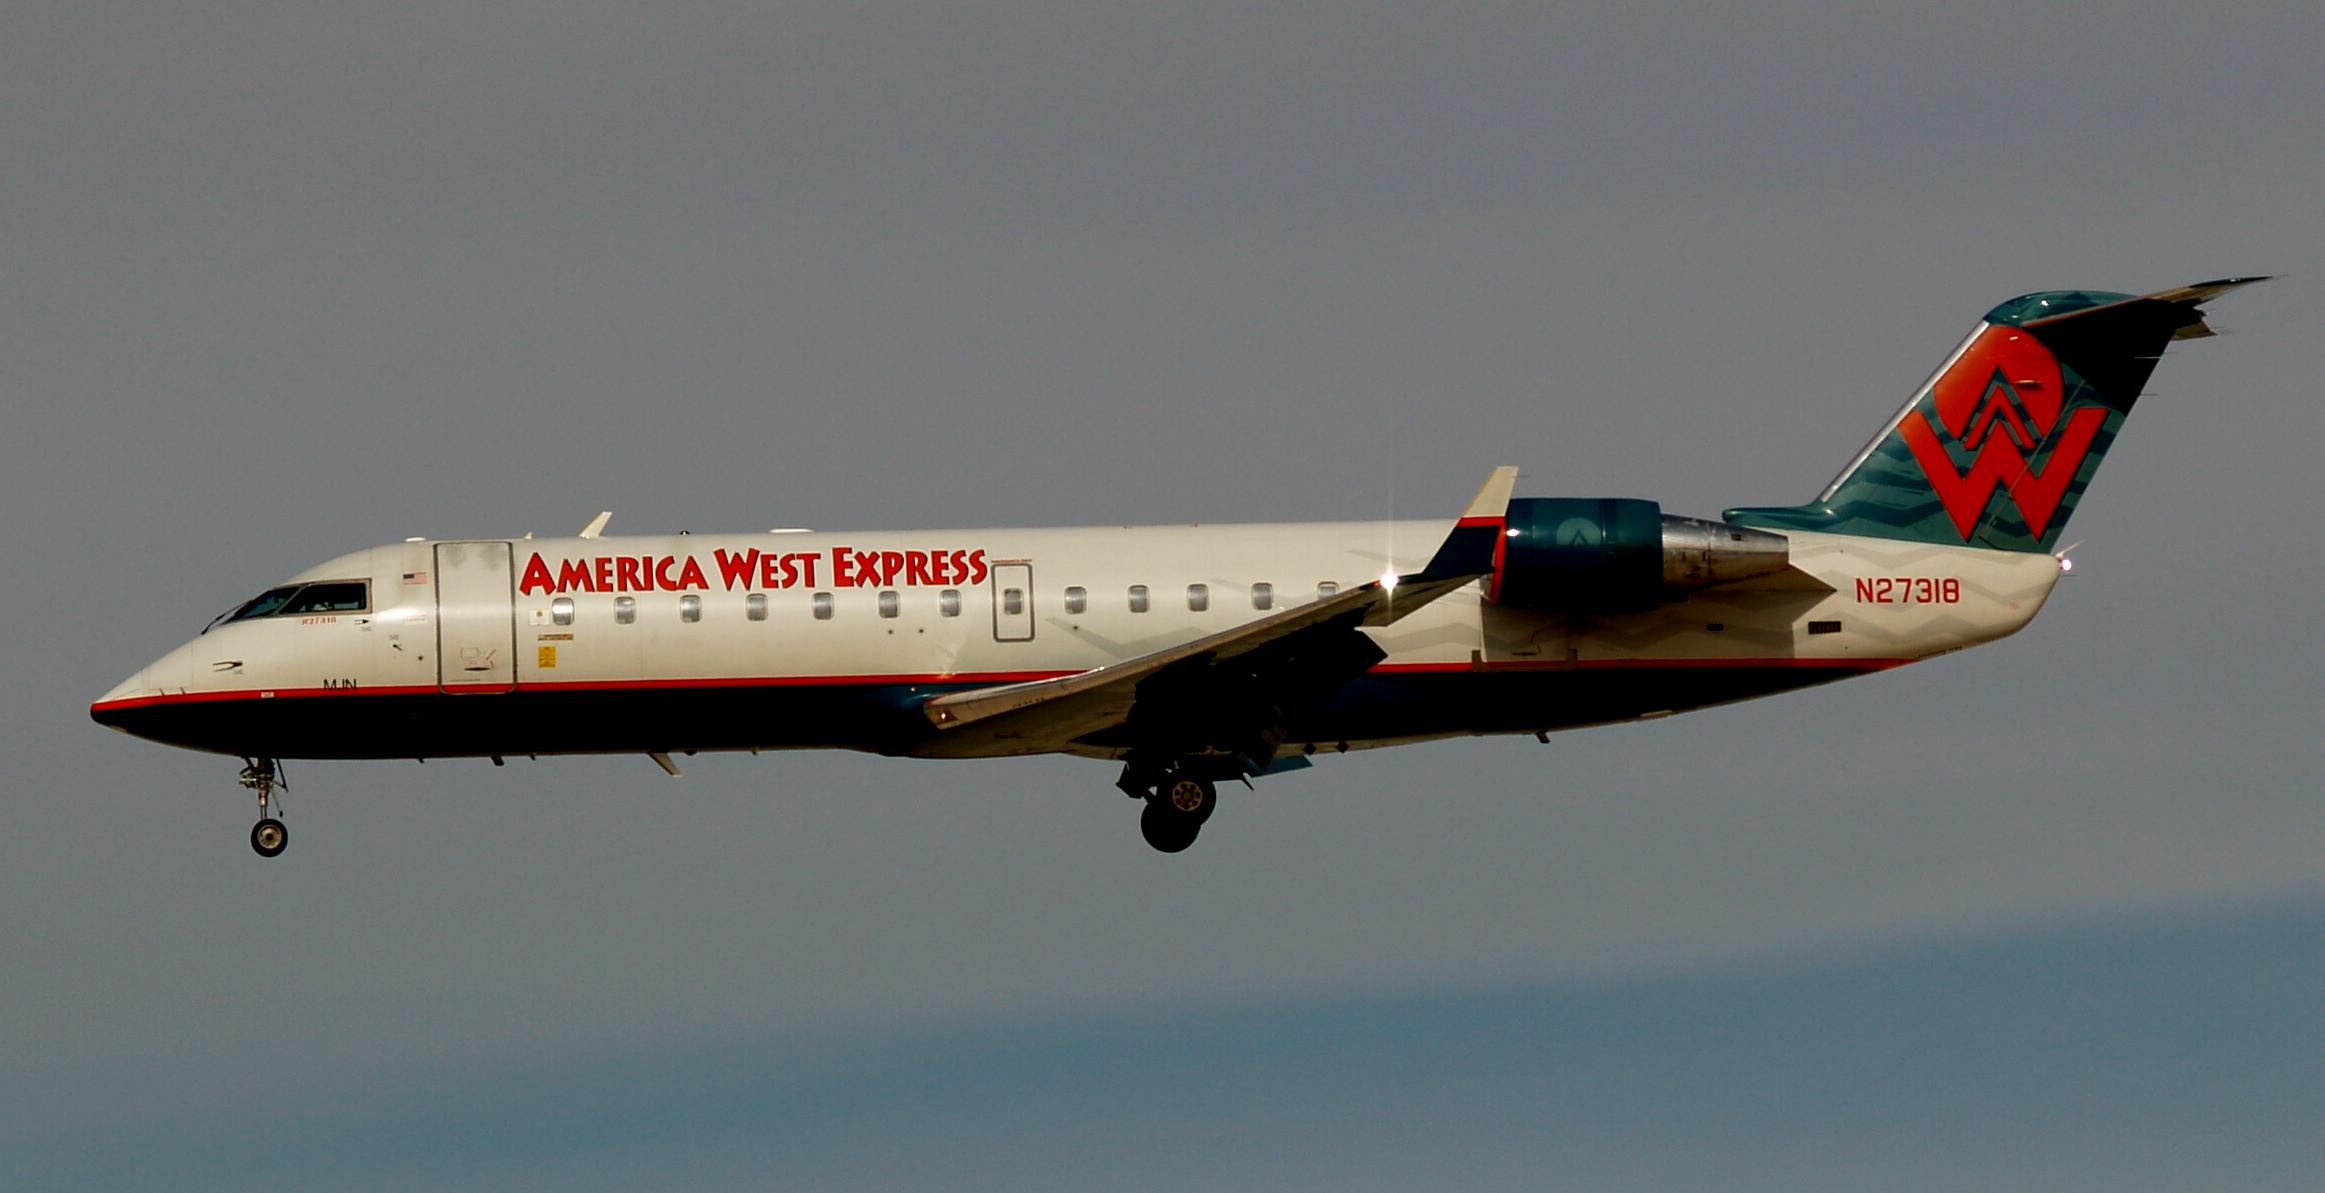 America West Express Bombardier CL-600-2B19 N27318